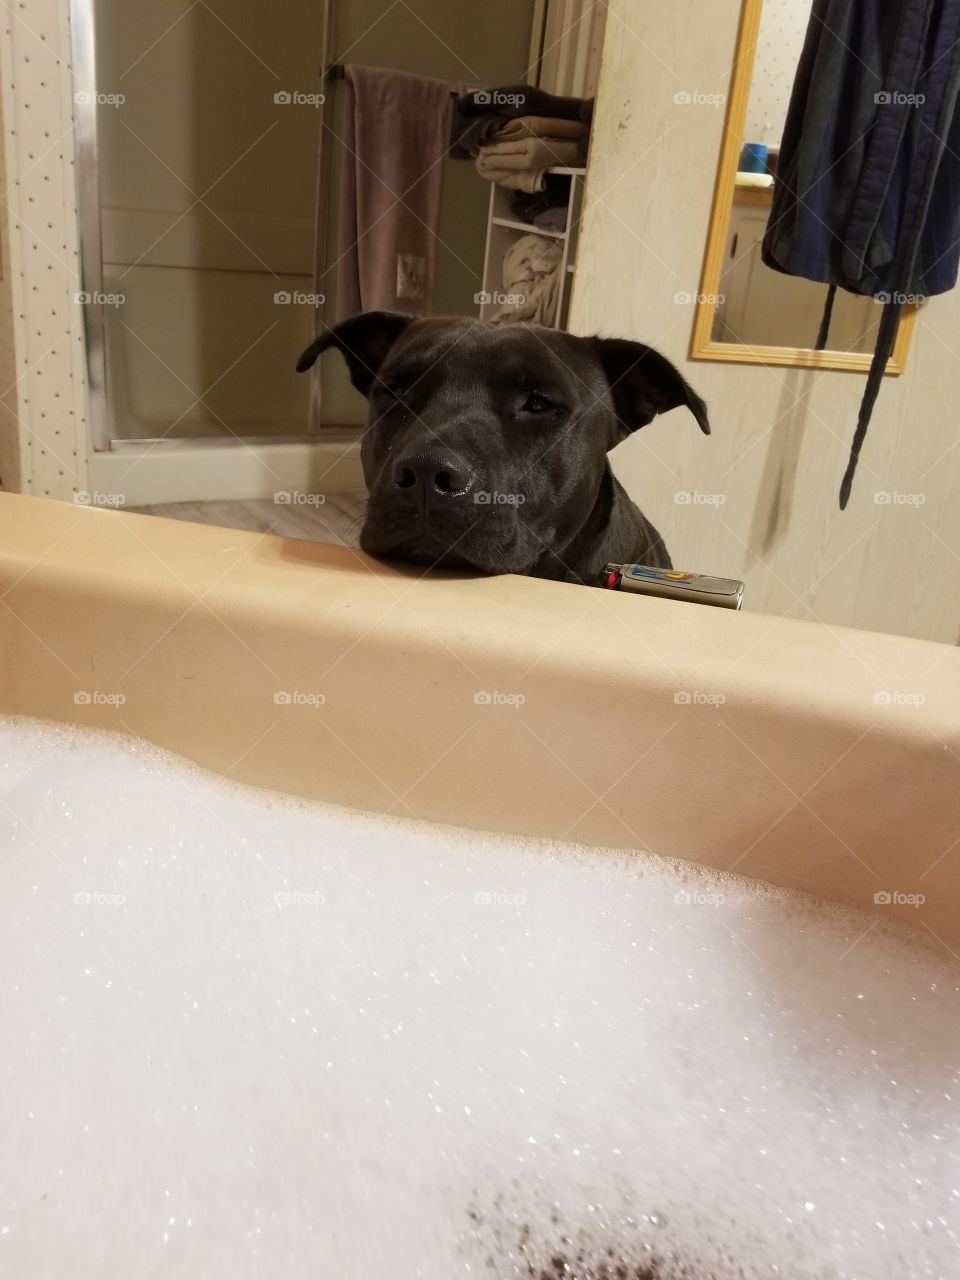 peanut wants a bubble bath